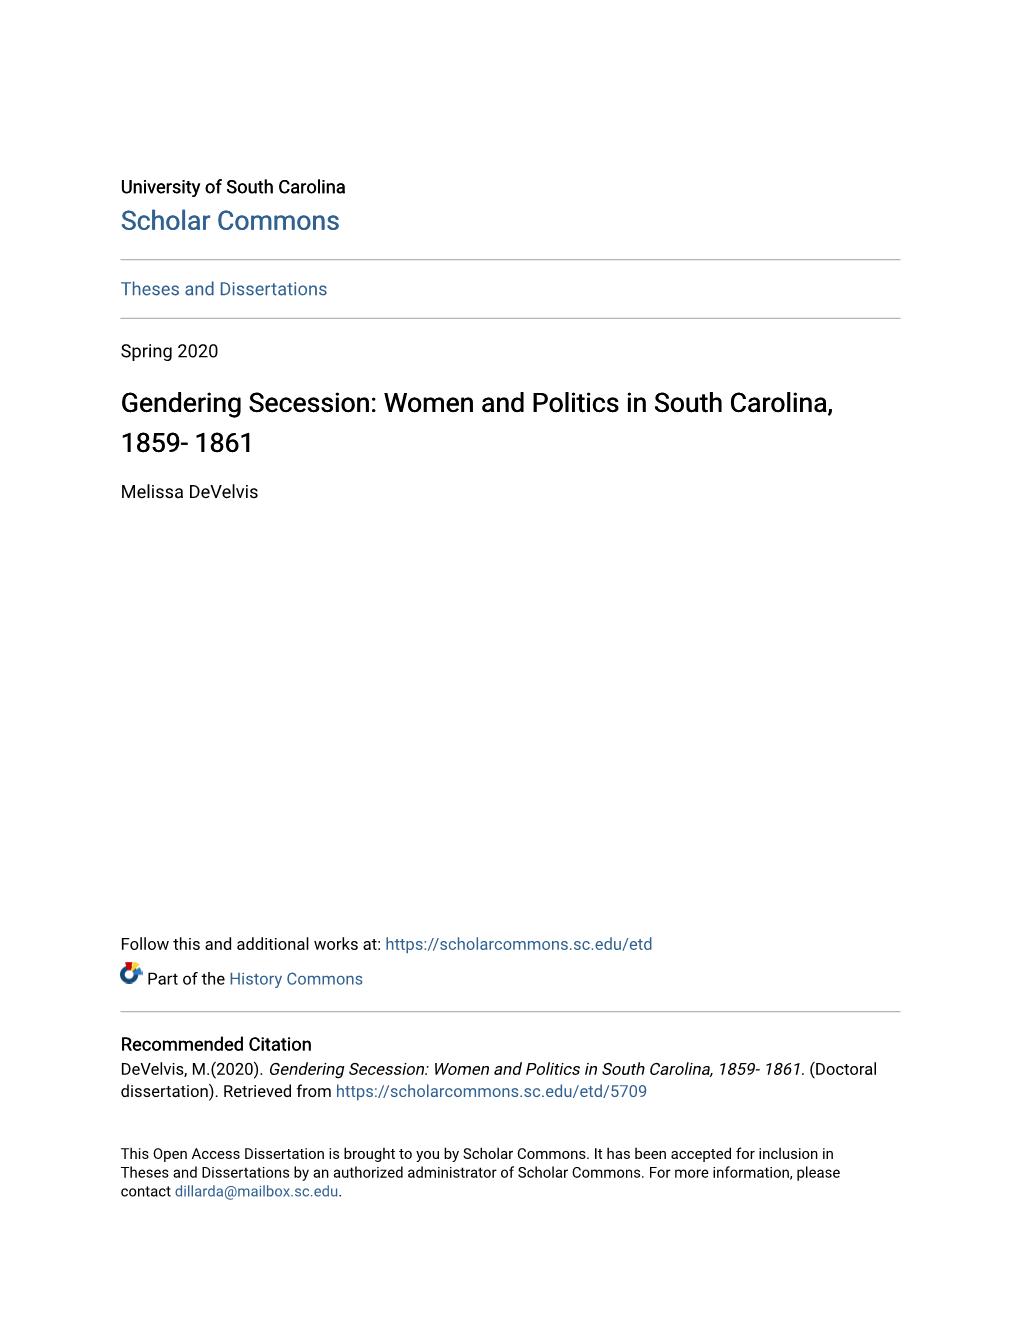 Gendering Secession: Women and Politics in South Carolina, 1859- 1861